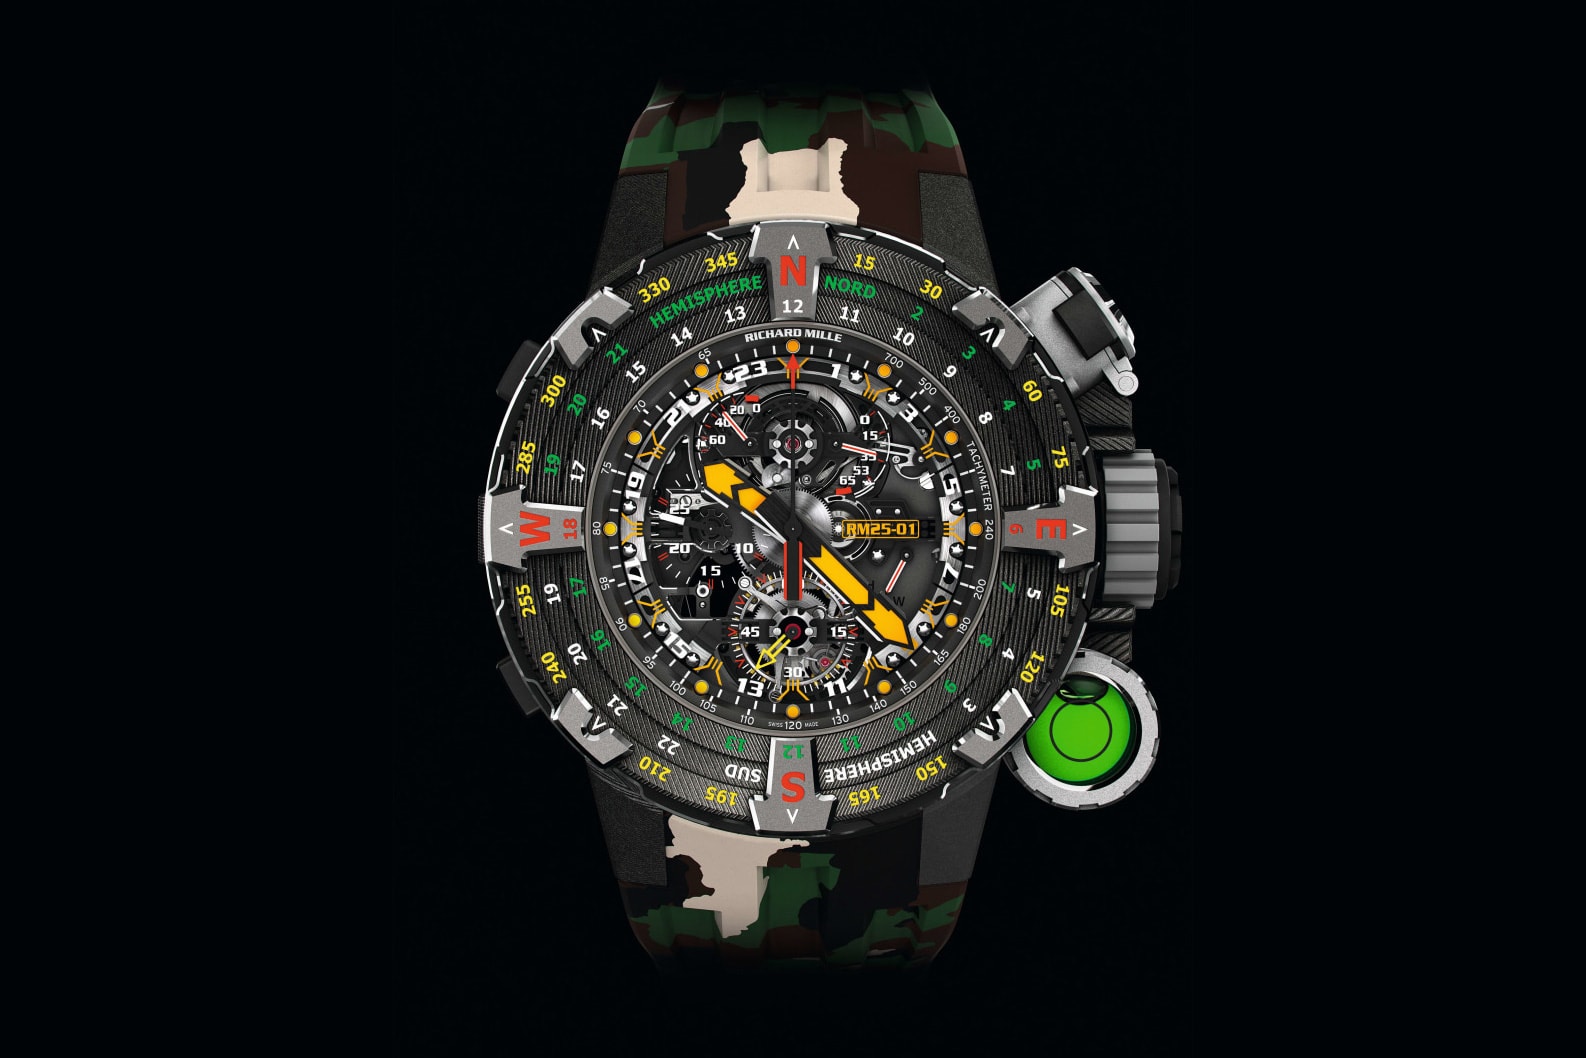 Richard Mille RM 25 01 Tourbillon Adventure expensive watch luxury swiss watch Sylvester Stallone time piece handmade